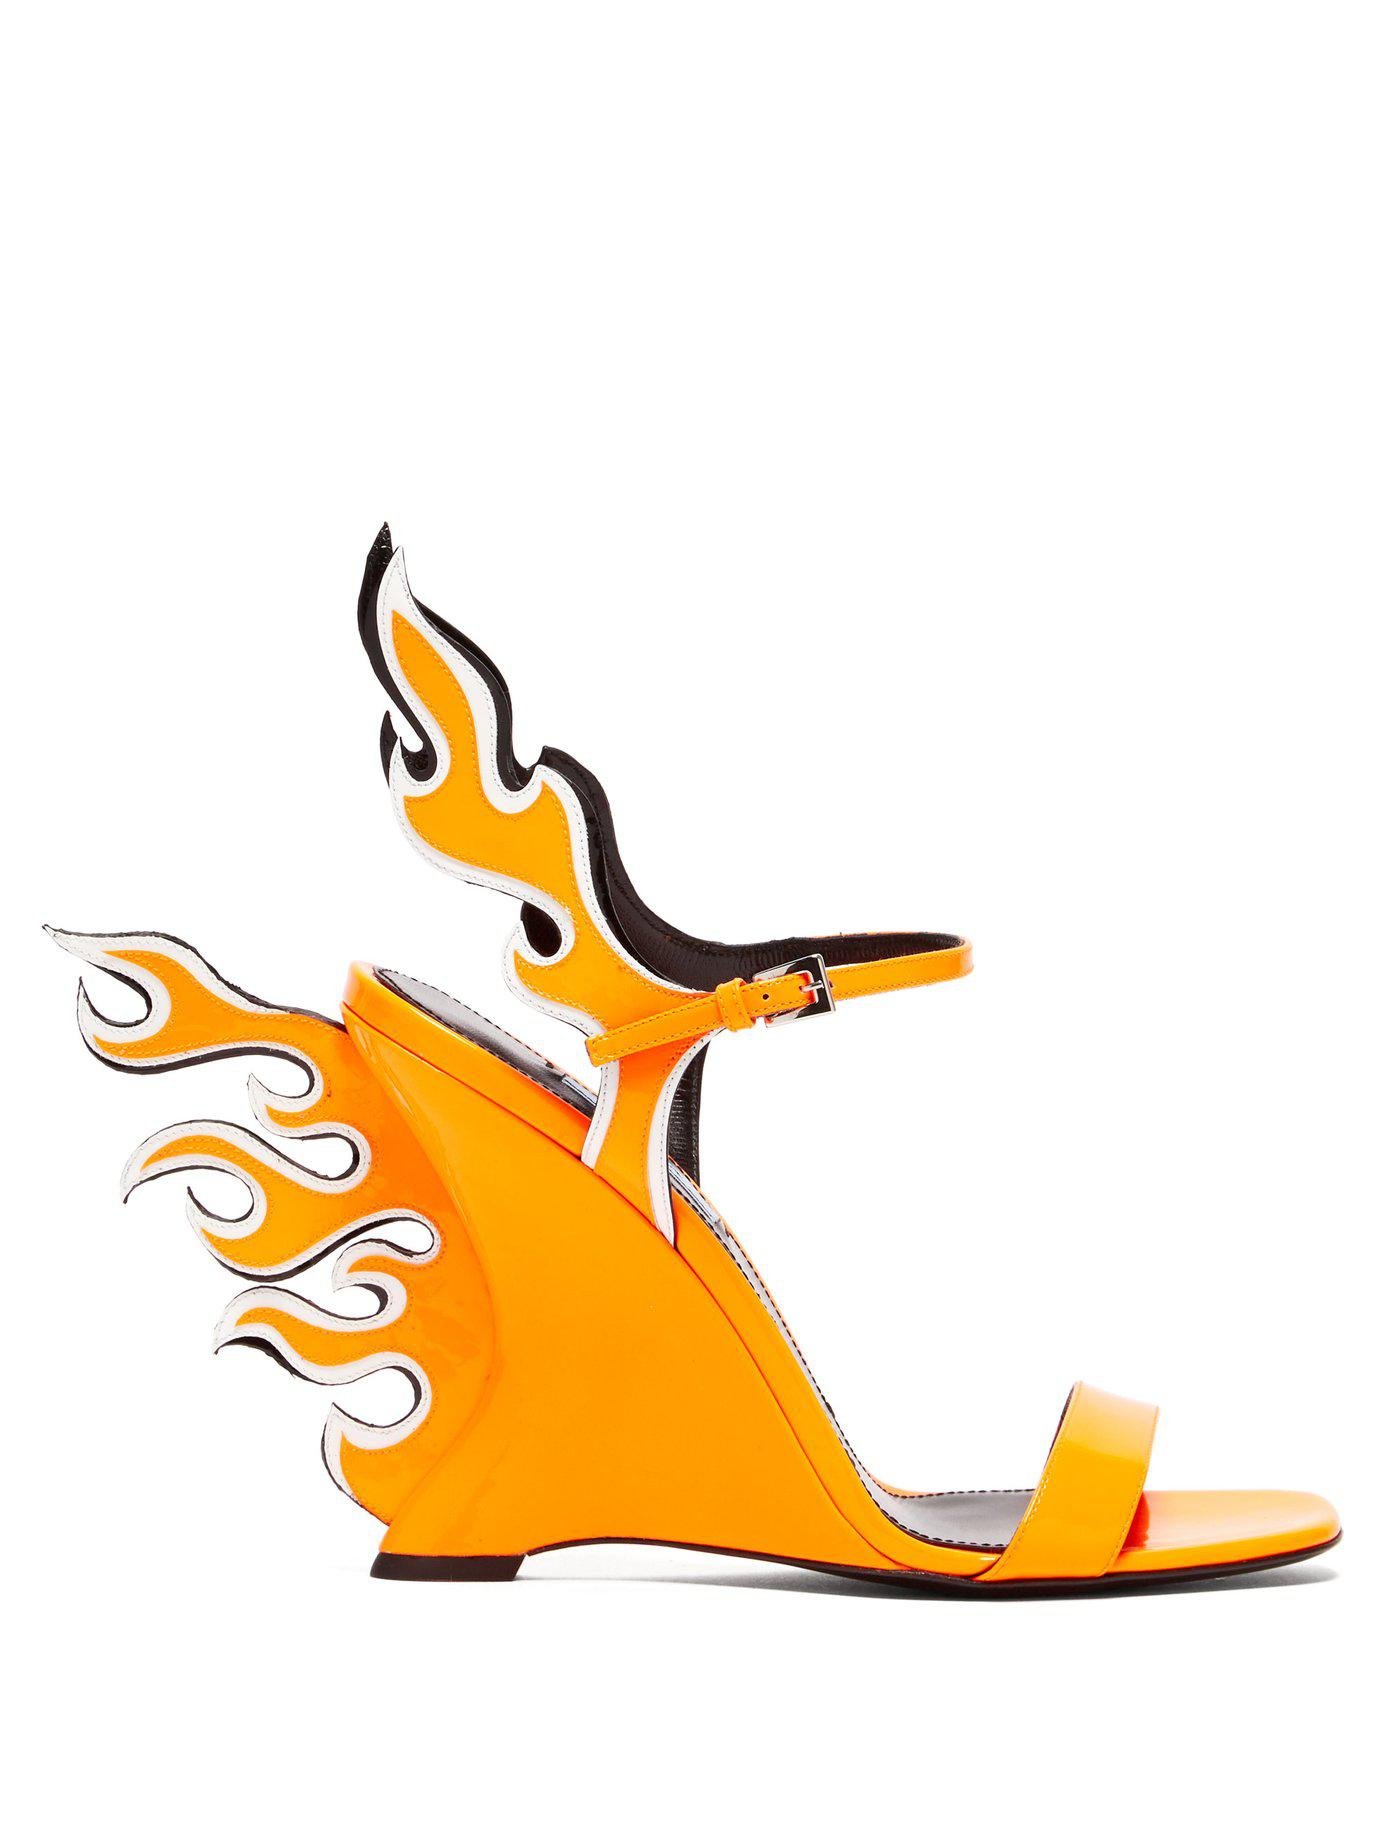 prada shoes flame, OFF 76%,www 